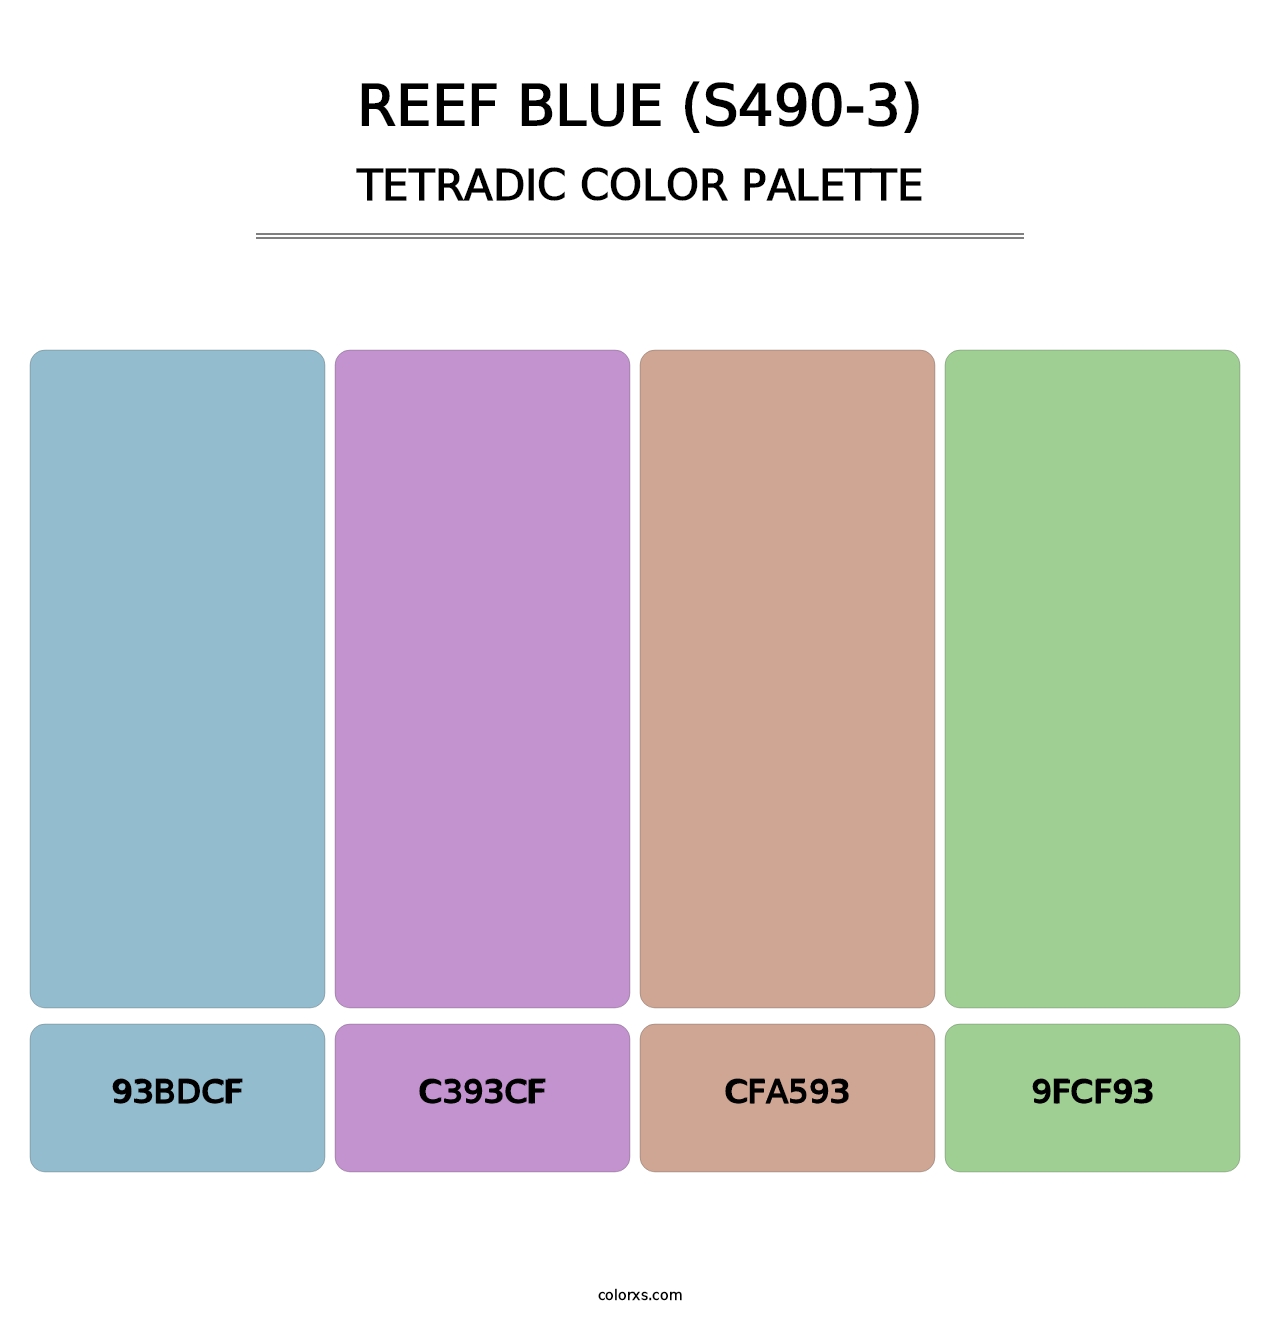 Reef Blue (S490-3) - Tetradic Color Palette